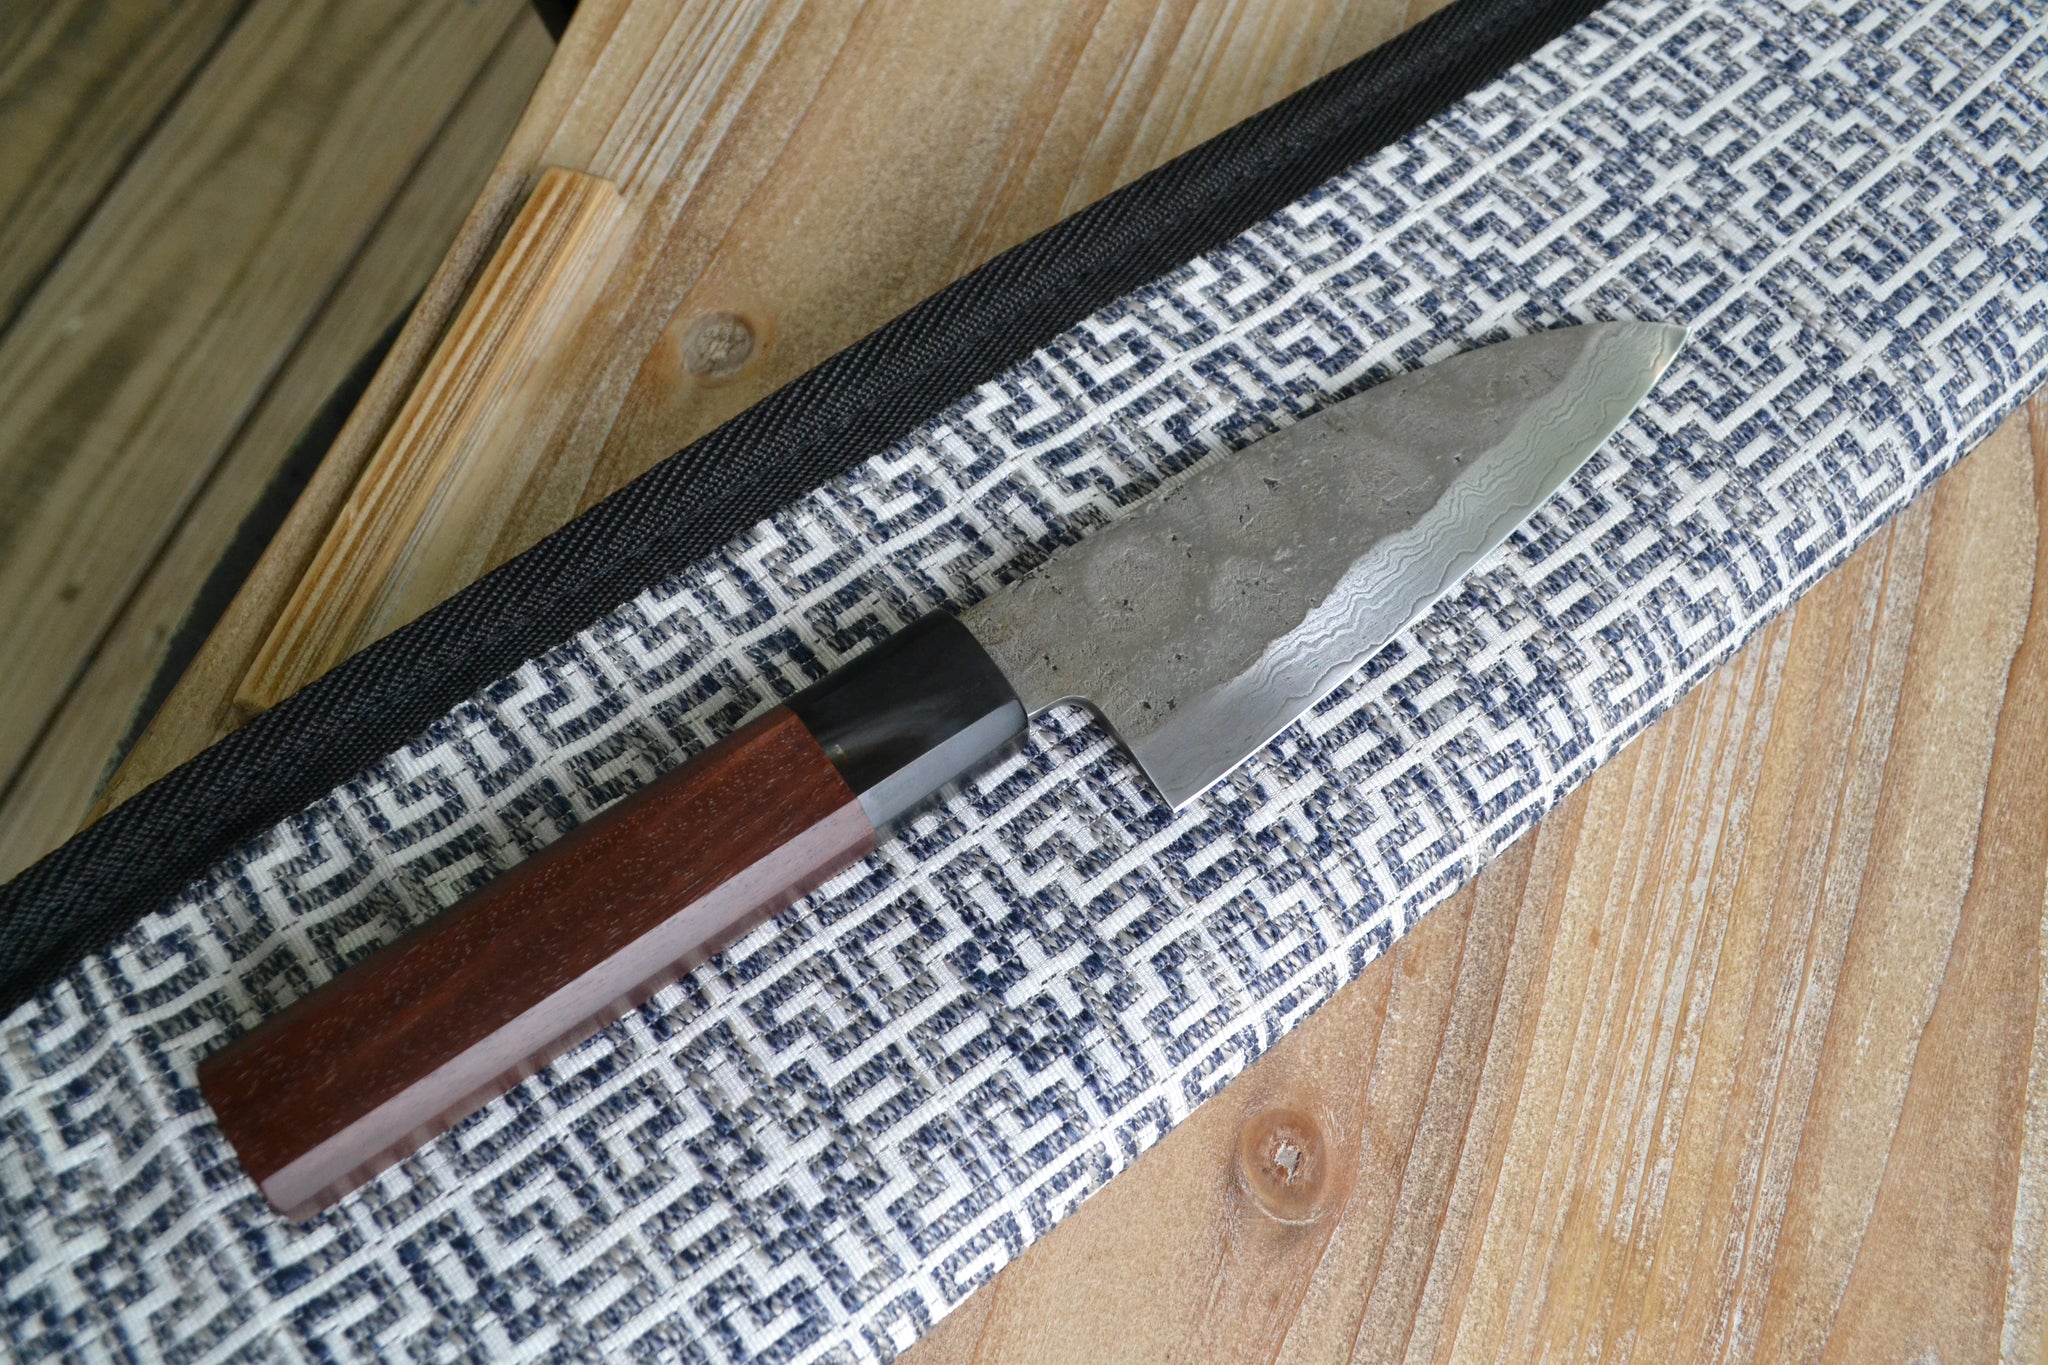 Wrought Iron San Mai Petty Knife